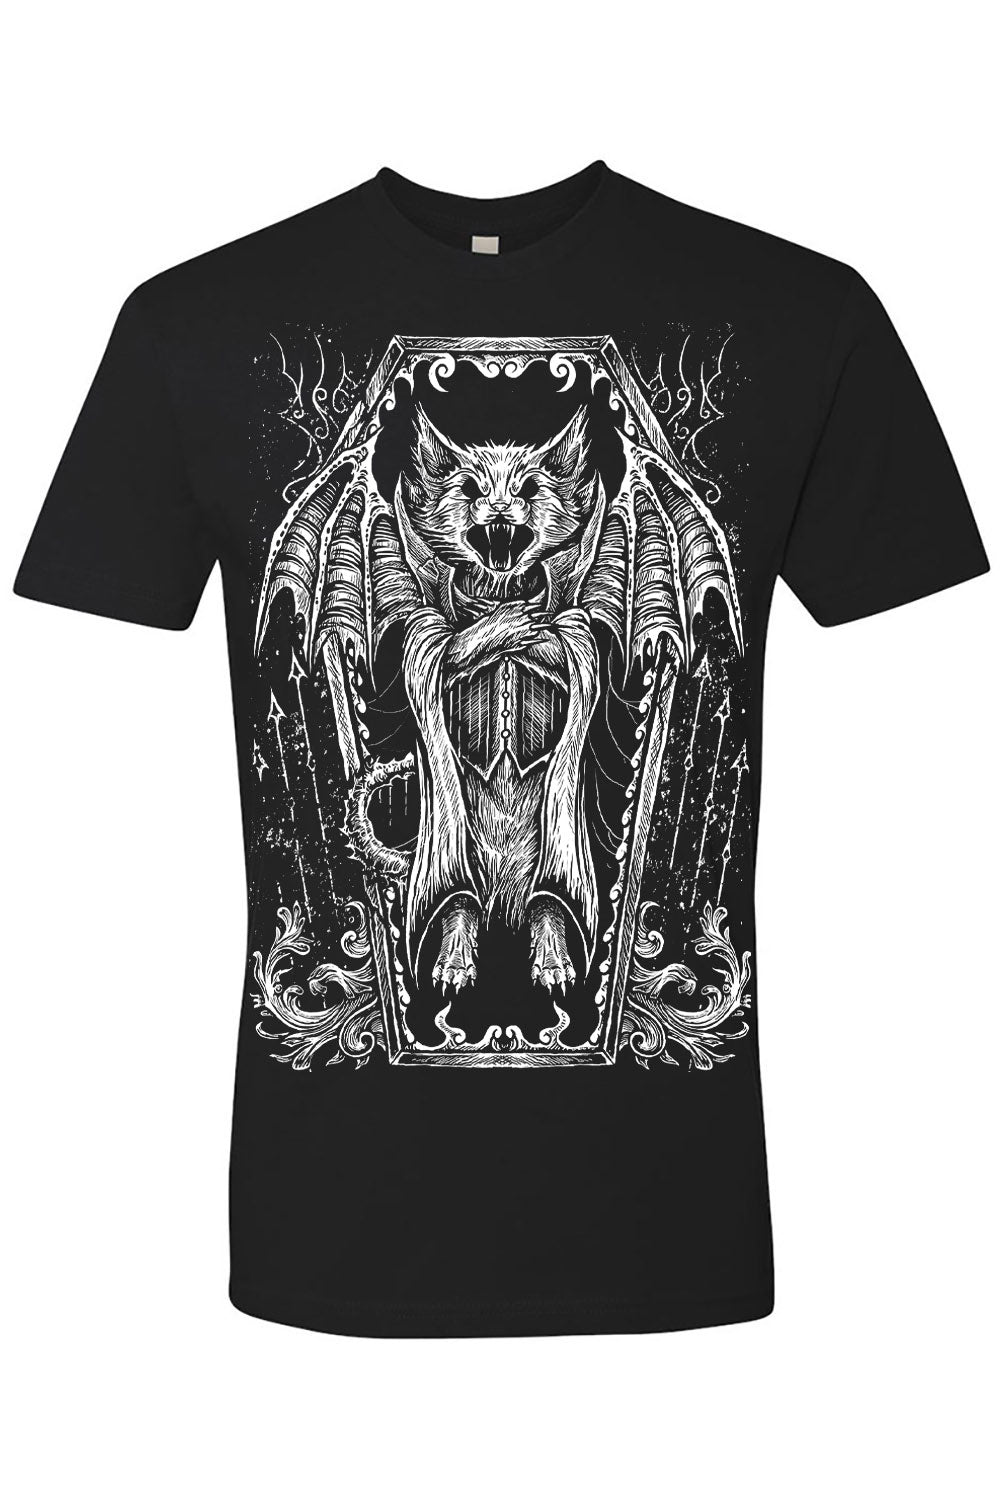 heavy metal cat shirt